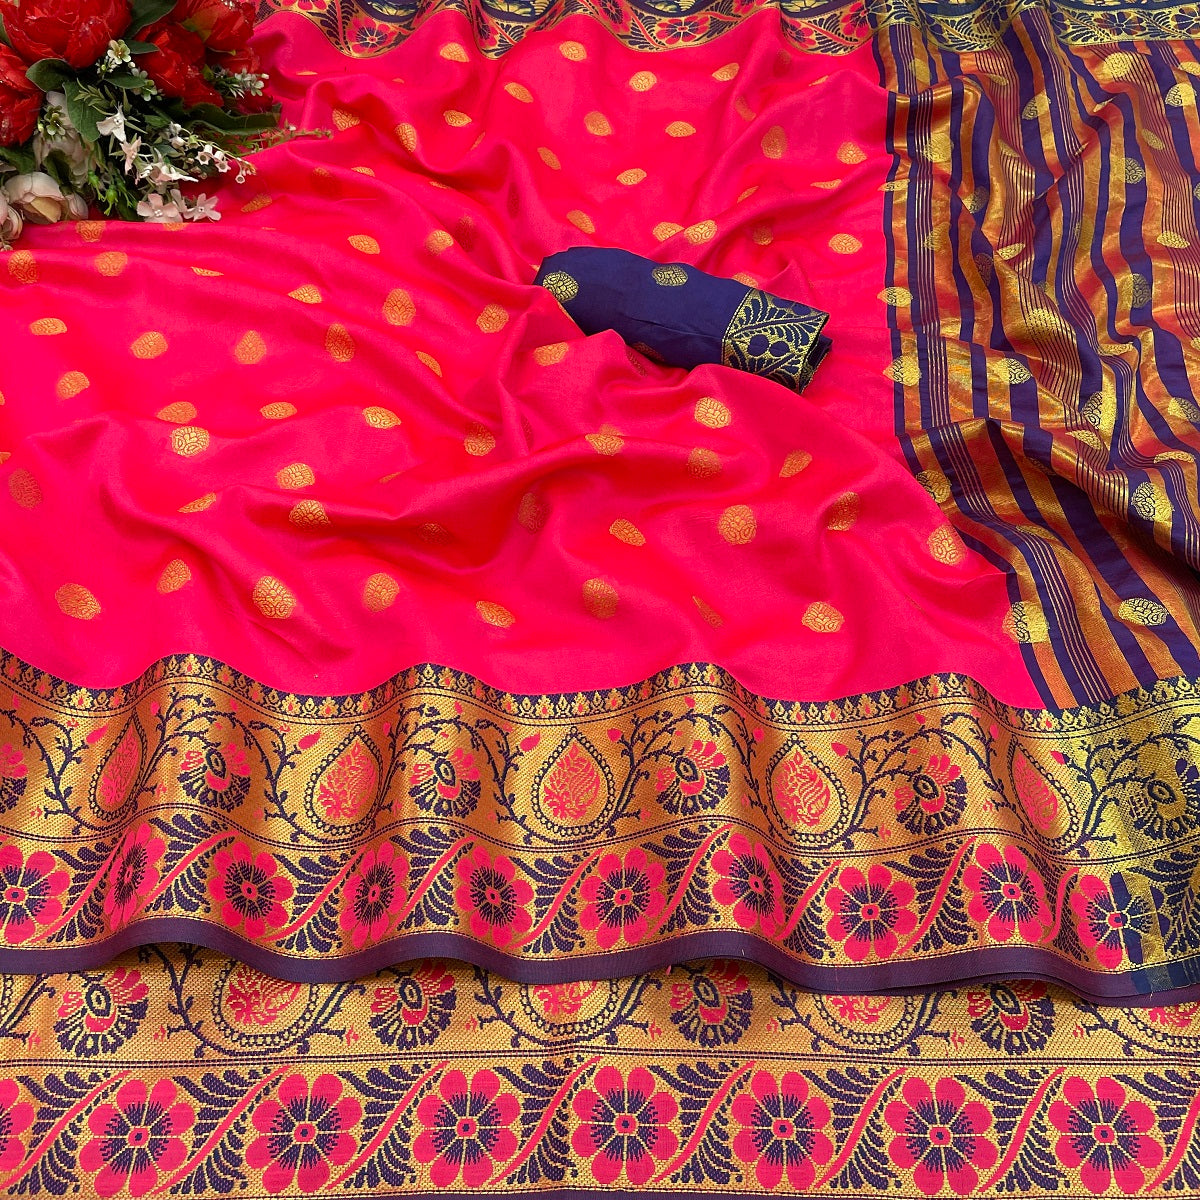 Women's Cotton Rich Silk With Jacquard Weaving Pink Saree - Vamika